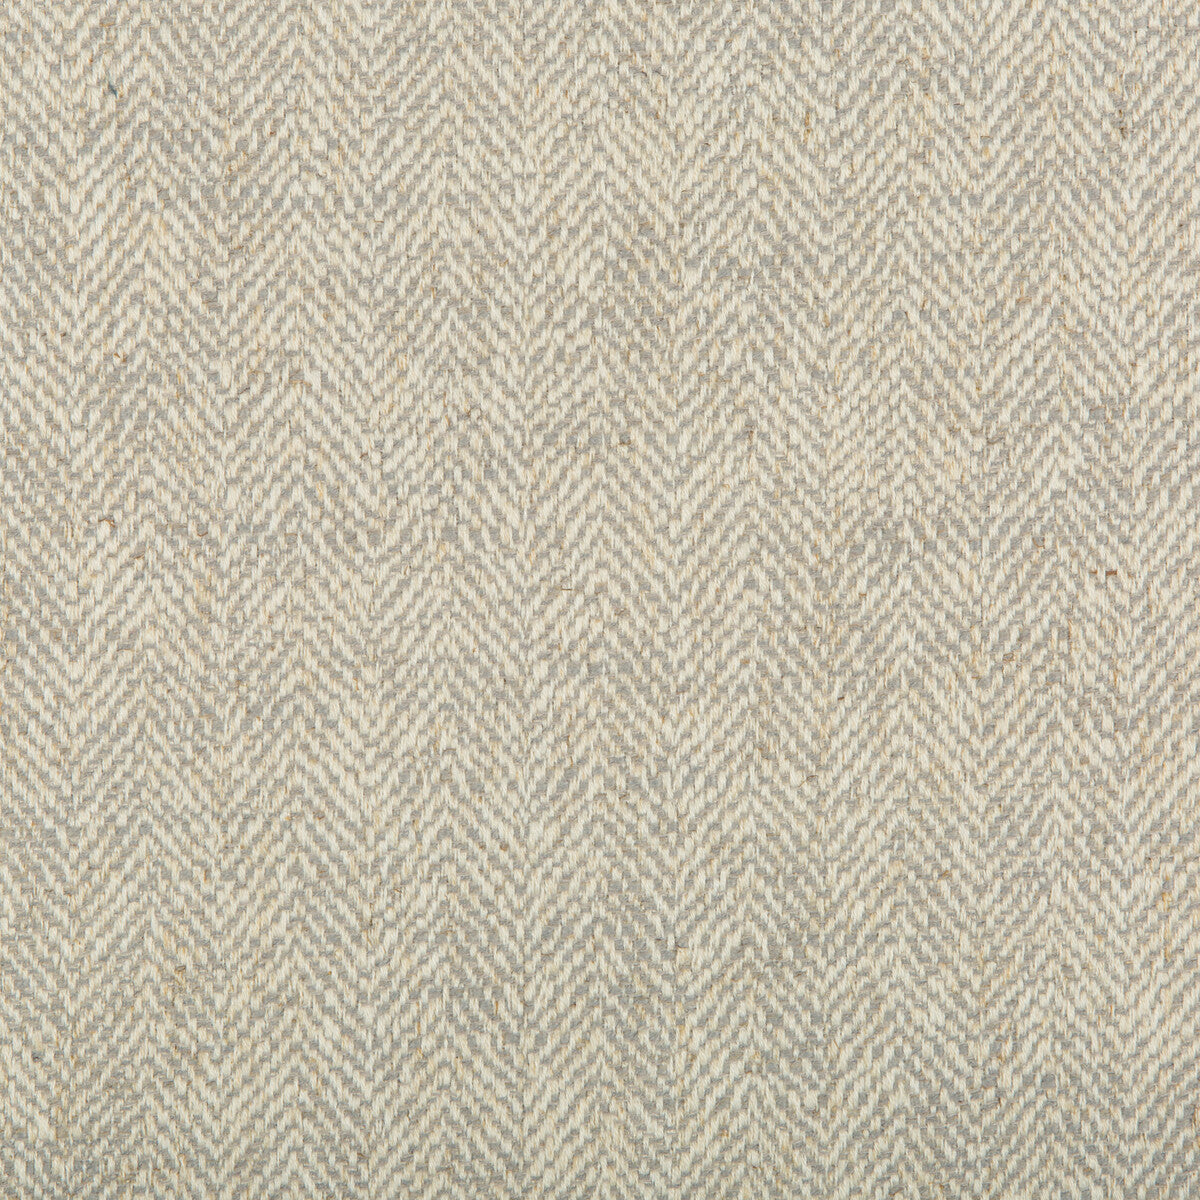 Kravet Smart fabric in 35228-11 color - pattern 35228.11.0 - by Kravet Smart in the Performance Kravetarmor collection